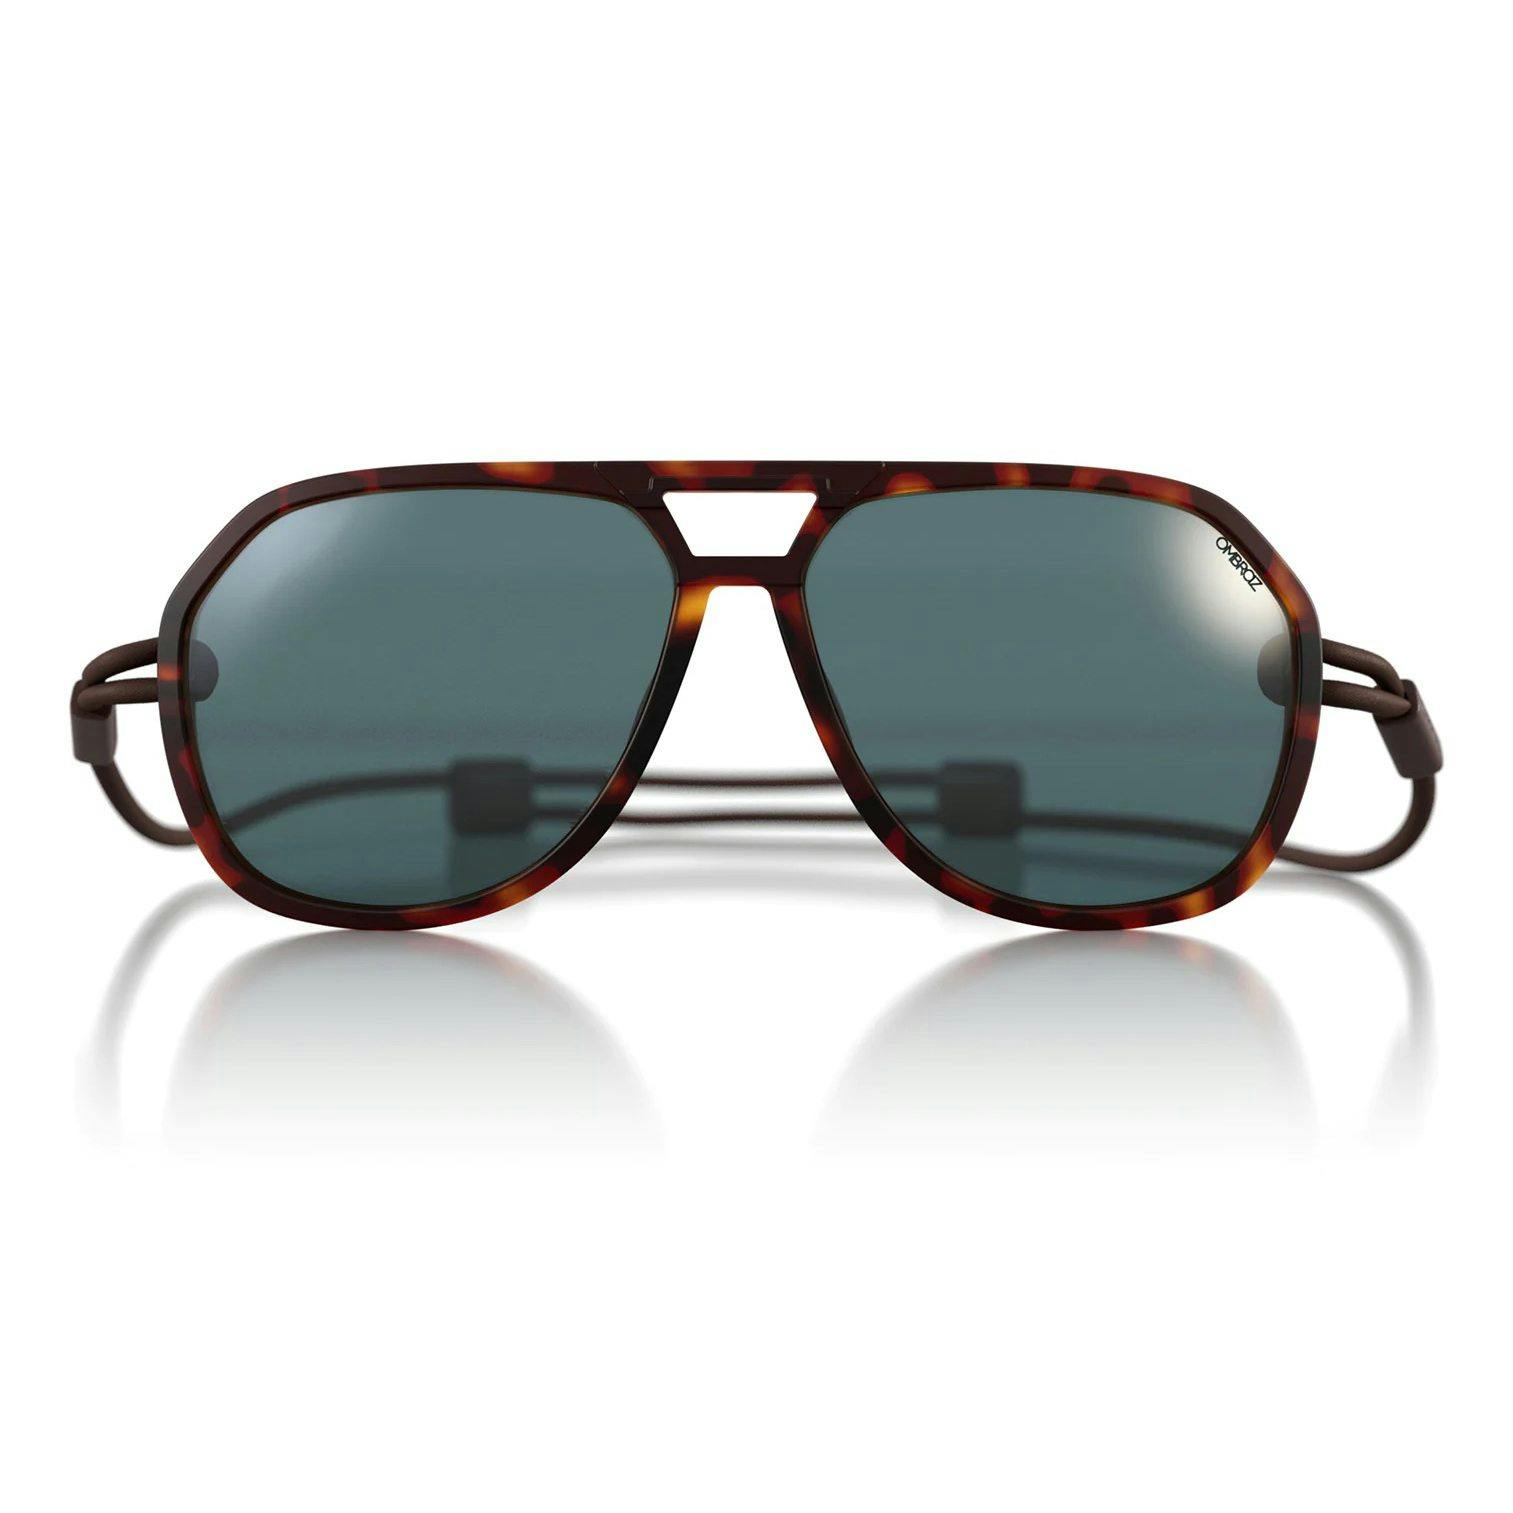 Ombraz Classic Armless Sunglasses - Tortoise/Polarized Grey